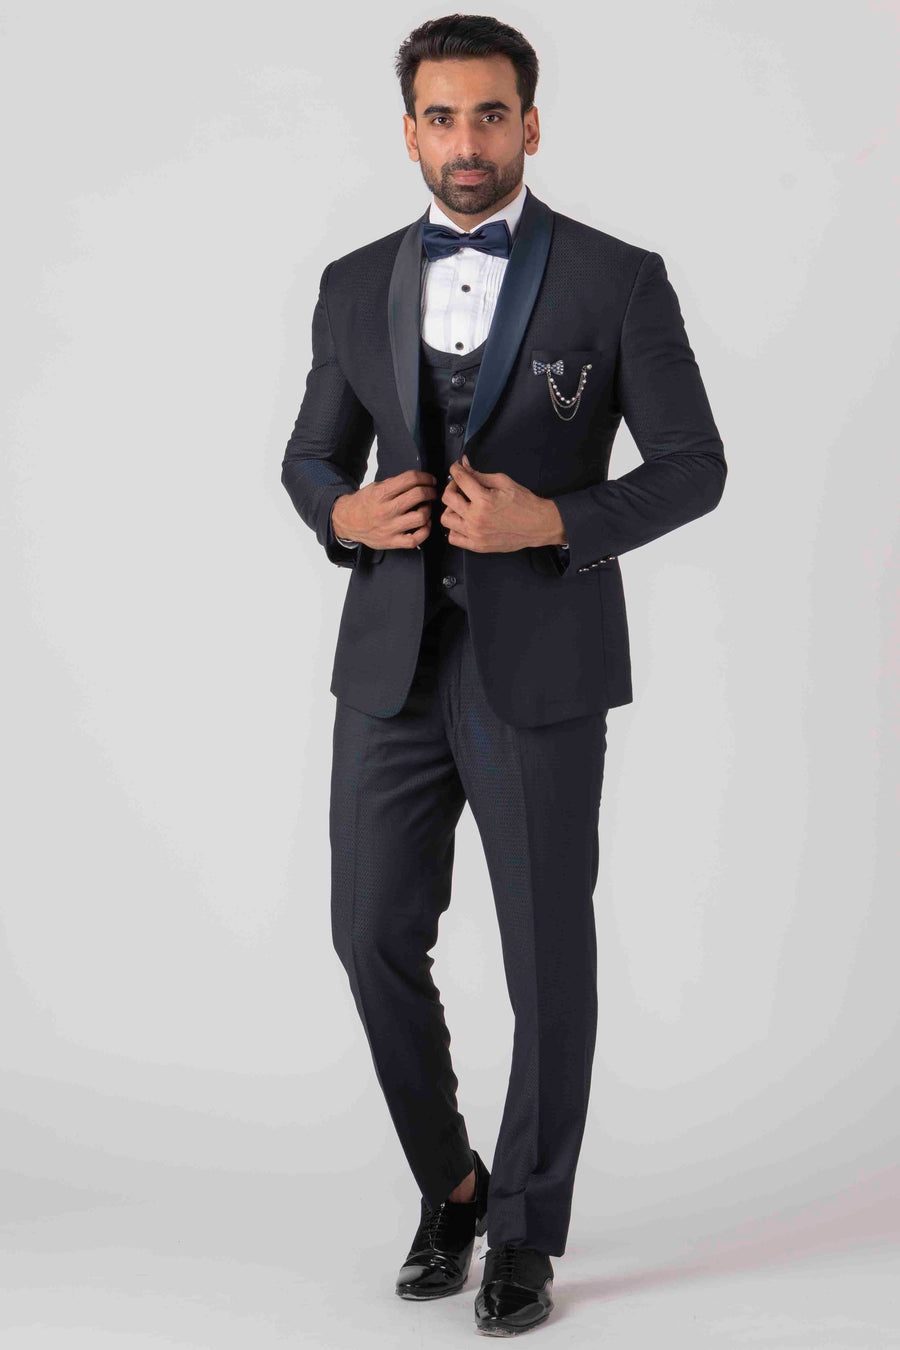 Buy Groom Wedding Suit Black, Men Wedding Outfit, Men Wedding Suit, Reception  Suit Groom, Tuxedo Suit Men , Men Suit Black, Groom Black Suit Online in  India - Etsy